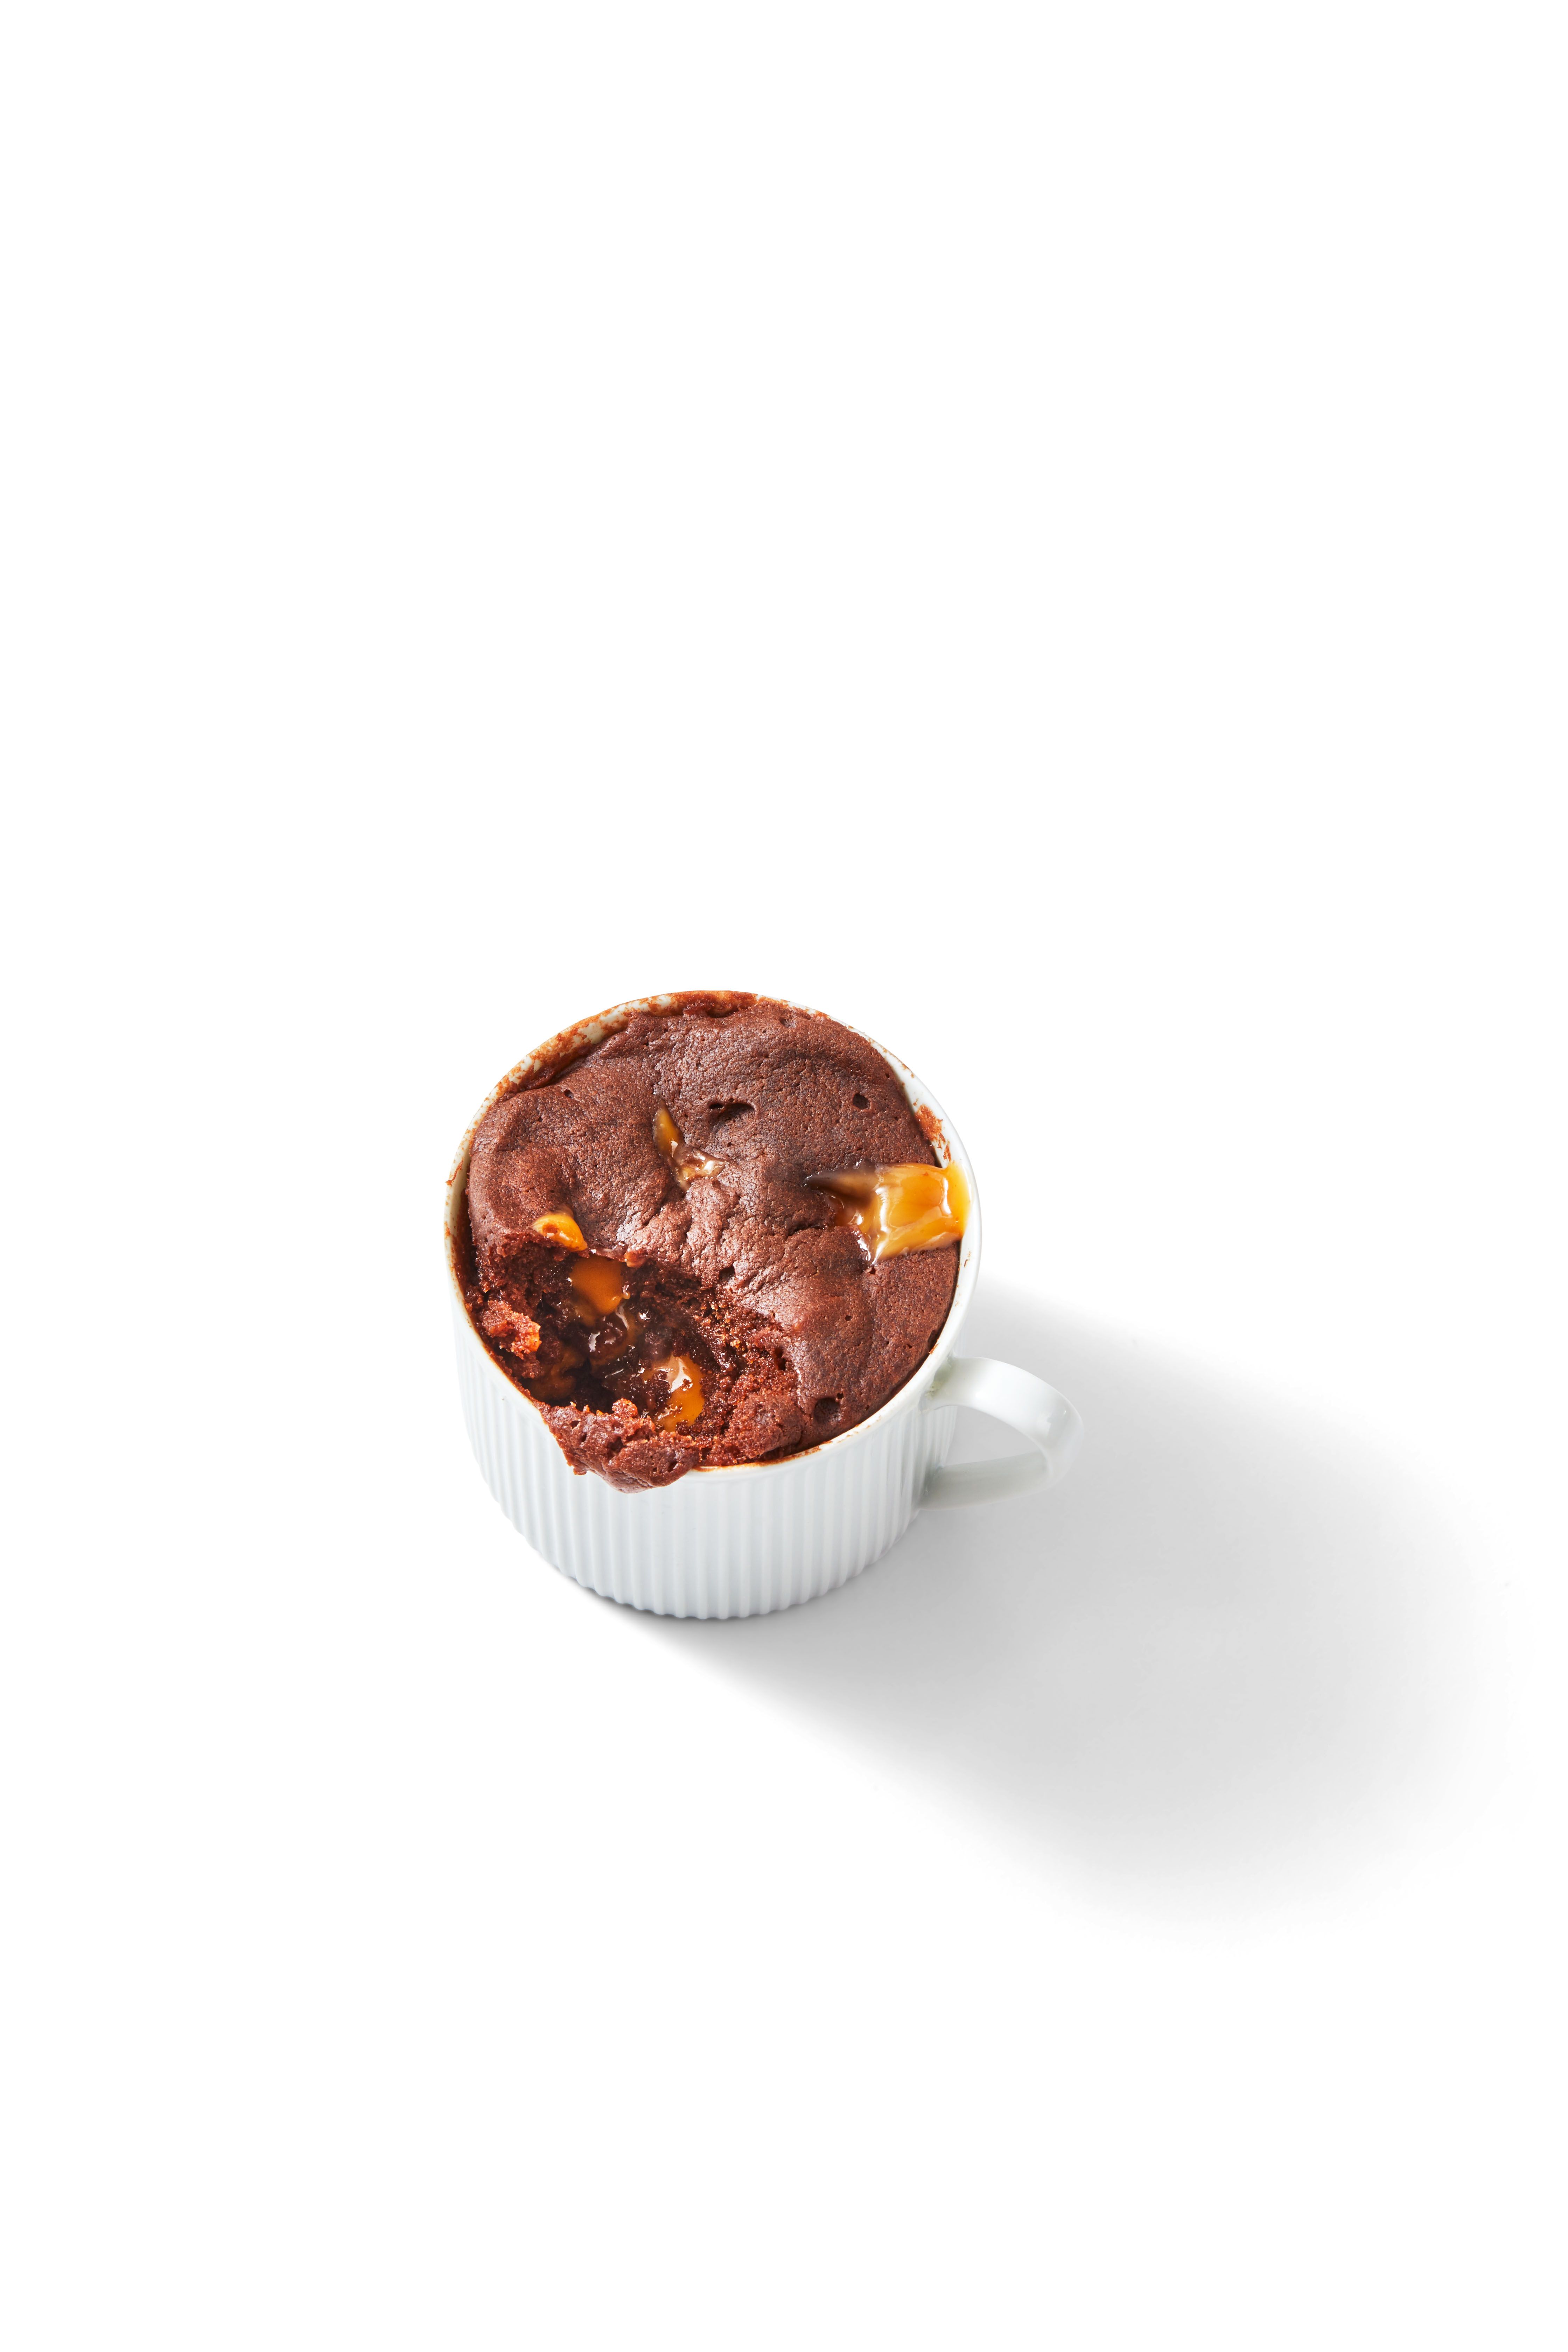 Best Chocolate Mug Cake Recipe - How to Make Chocolate Mug Cake